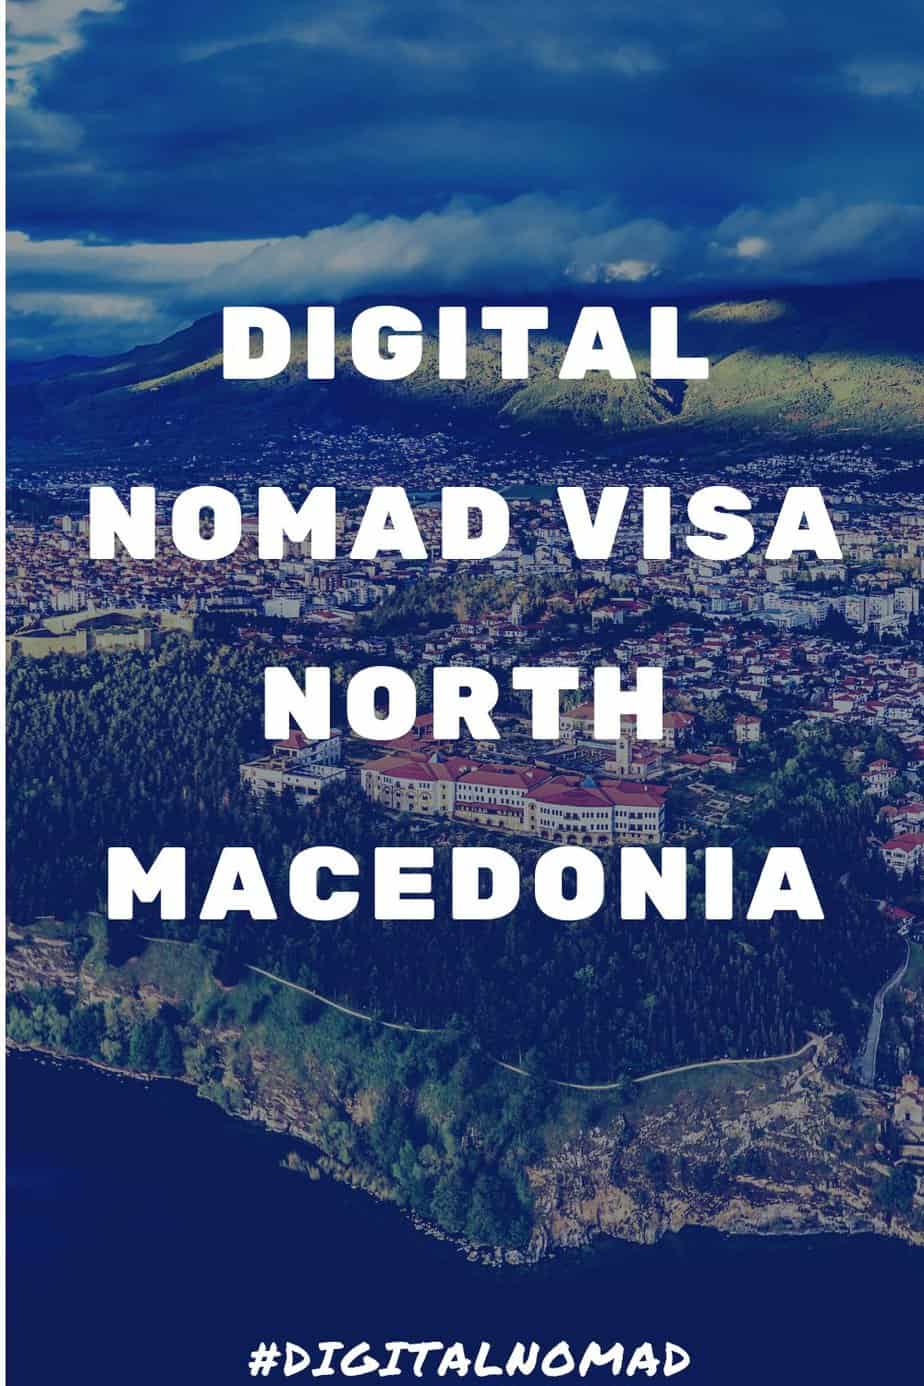 North Macedonia digital nomad visa – How does it work?